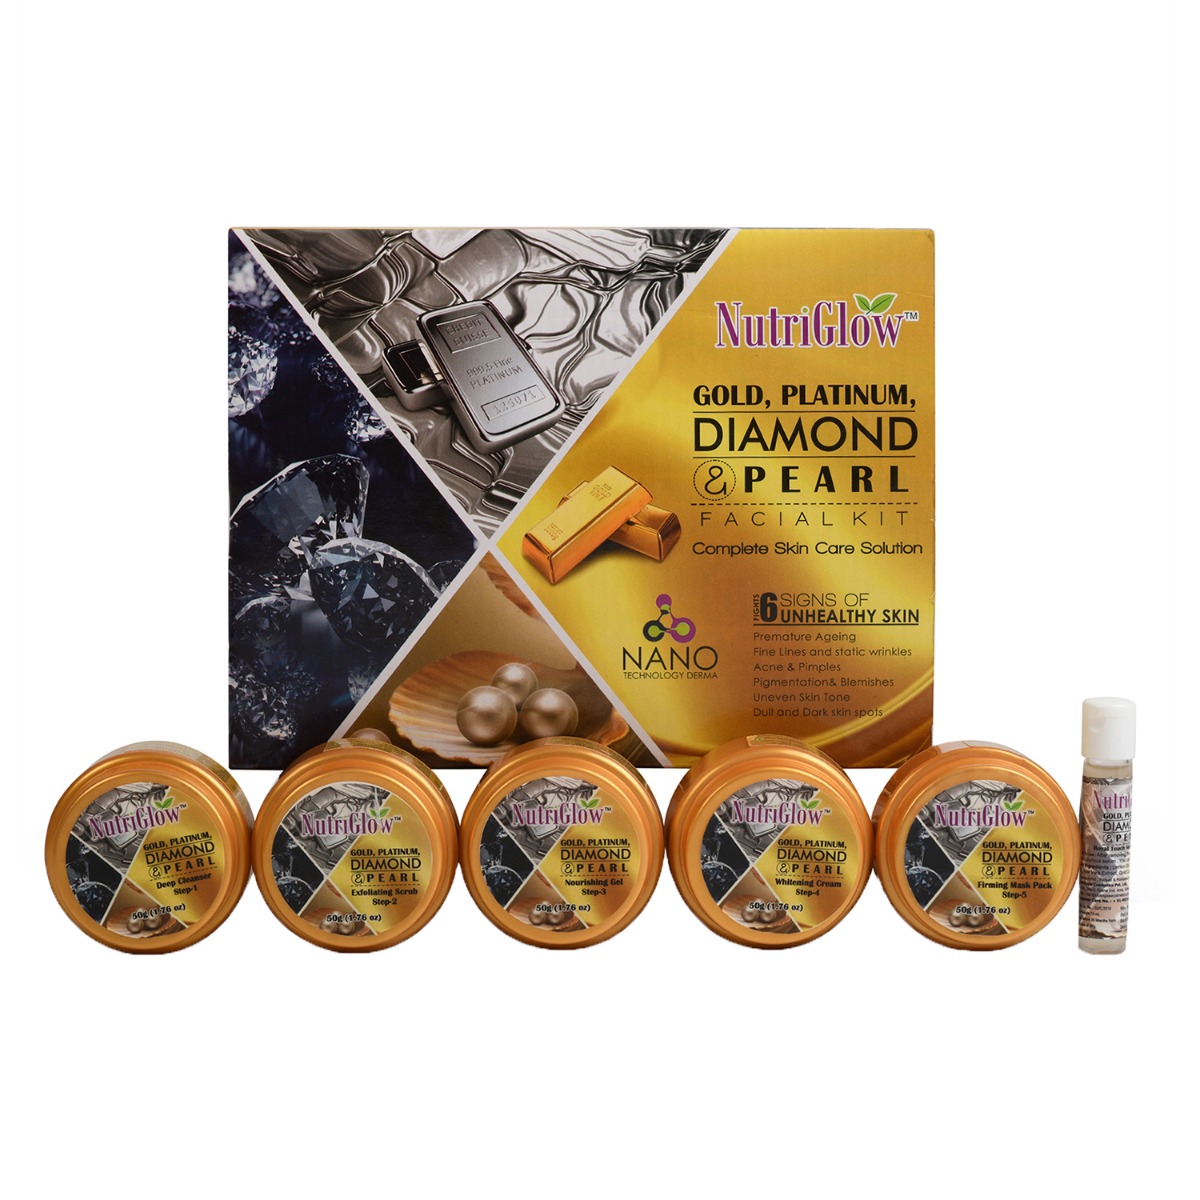 NutriGlow Gold Platinum Diamond And Pearl Facial Kit